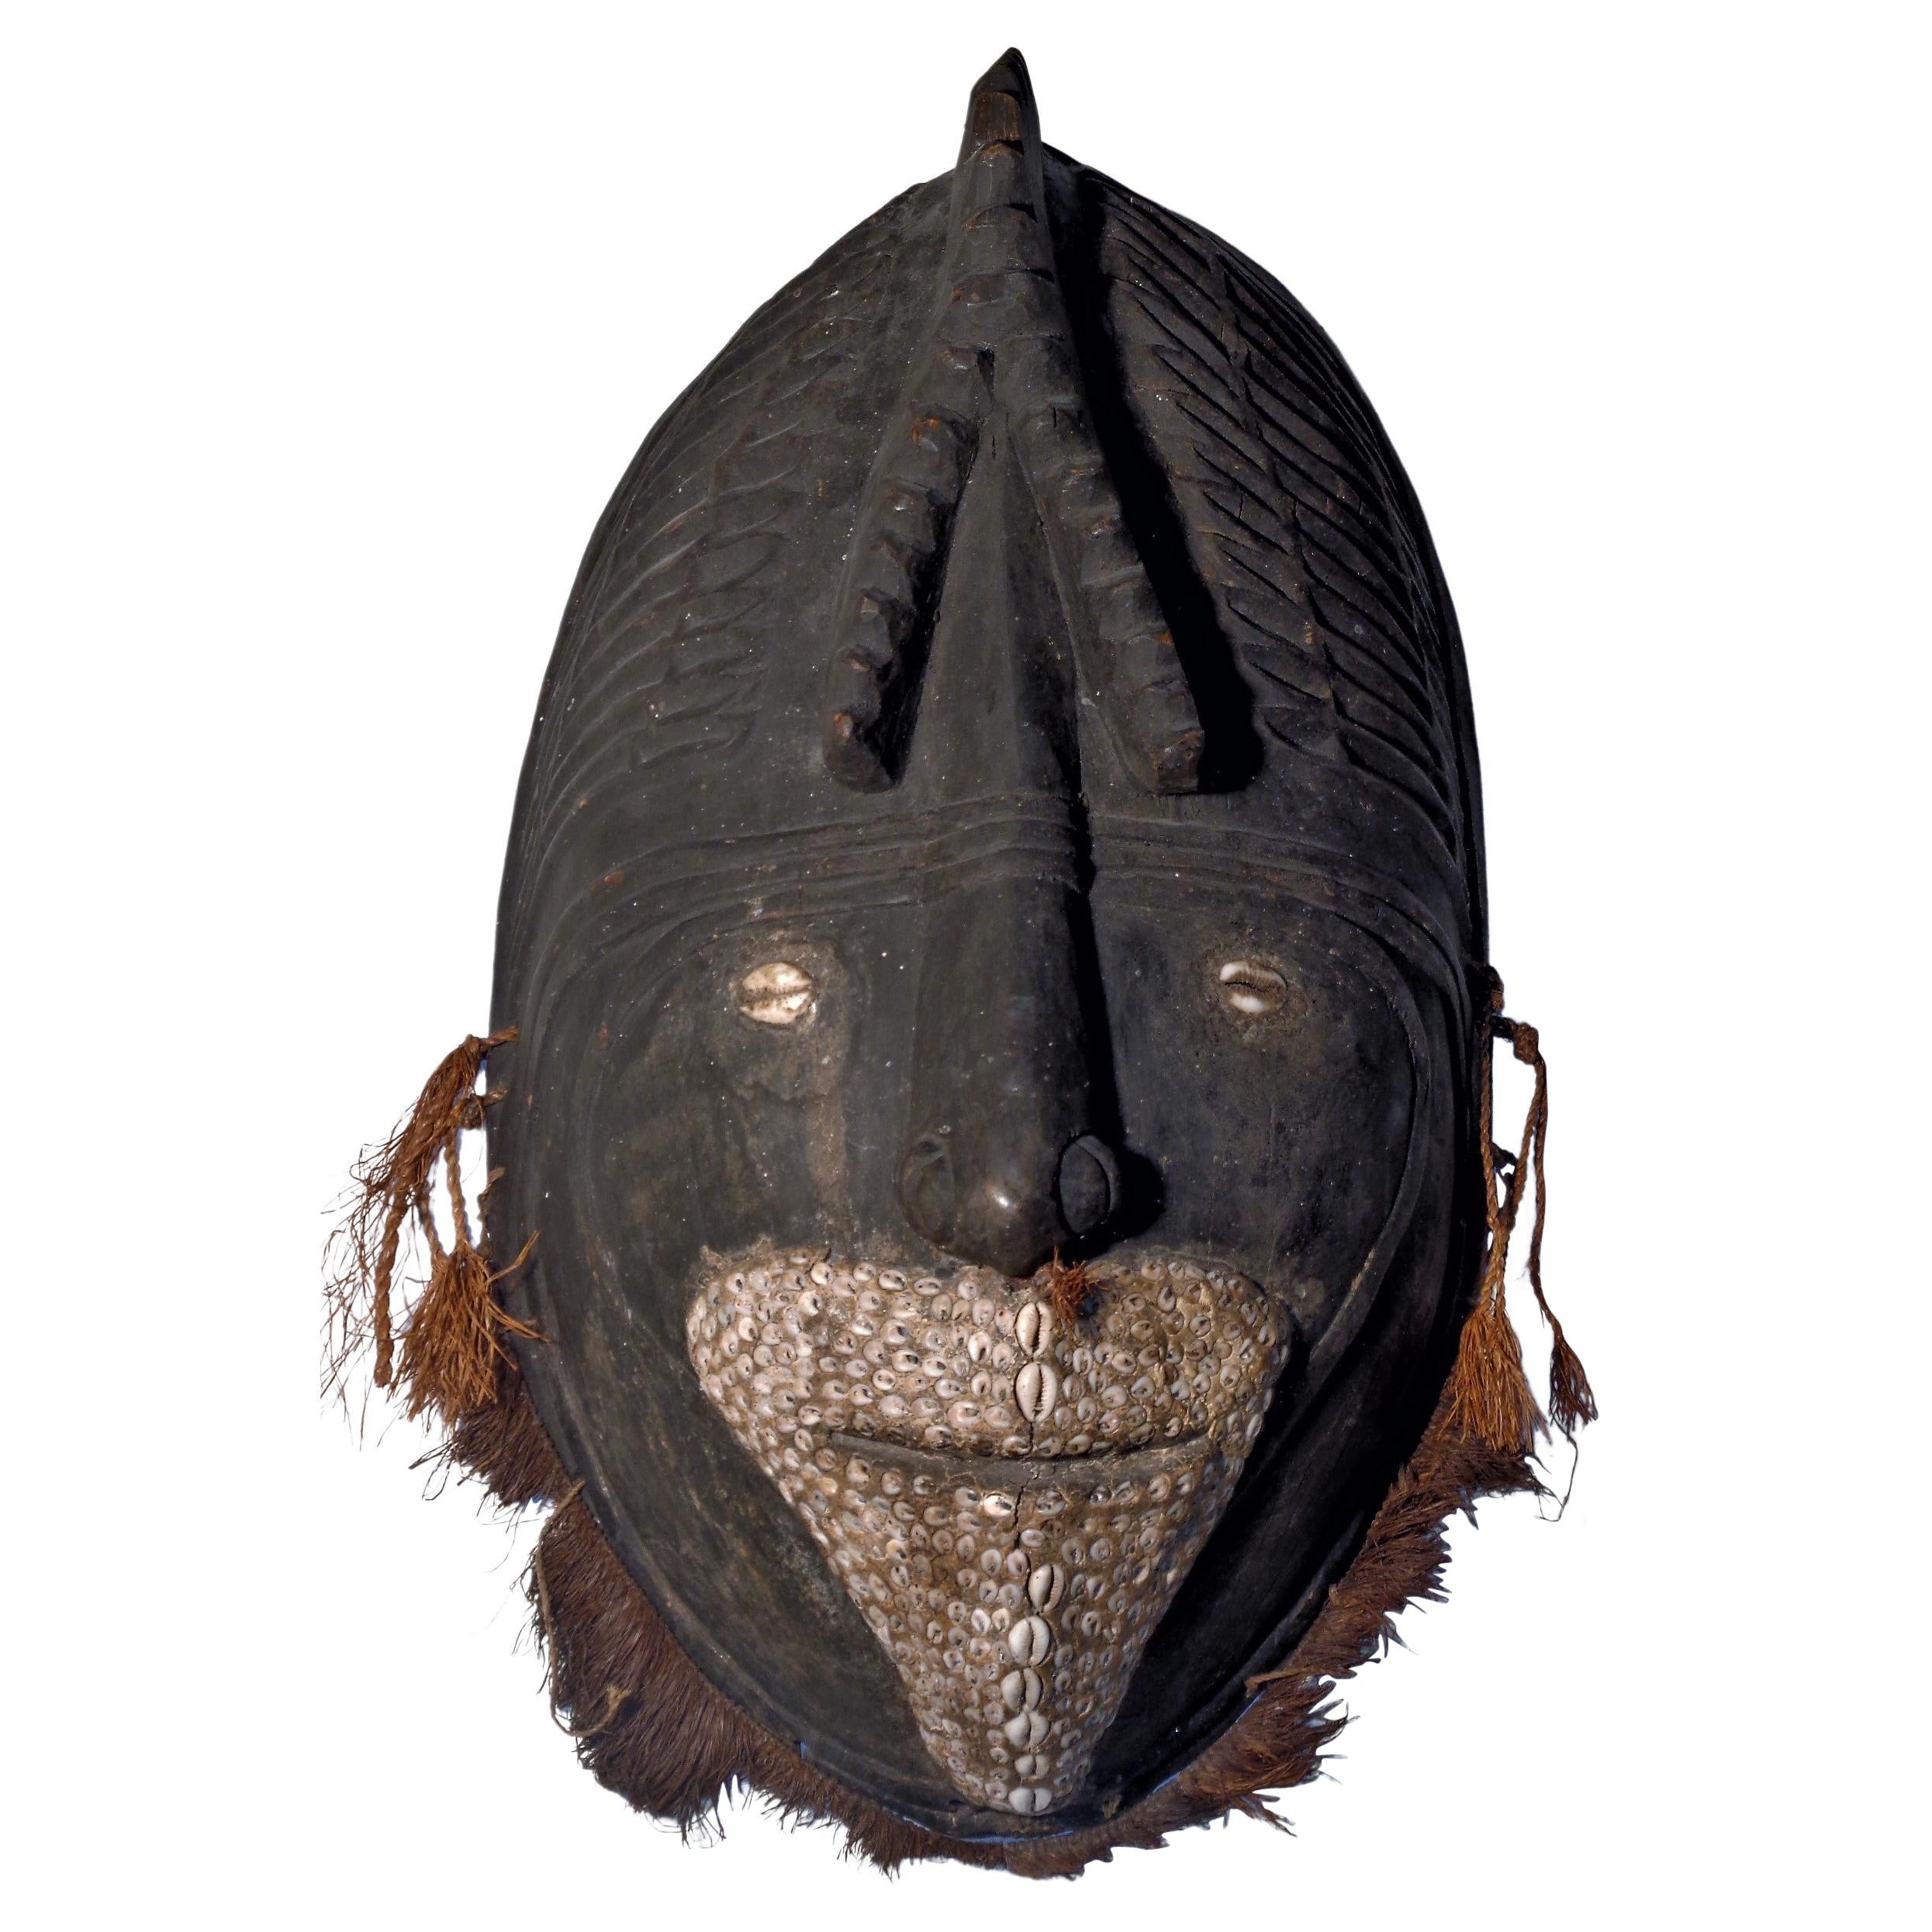 Biwat People Ancestral Mask Papua New Guinea, Circa 1980